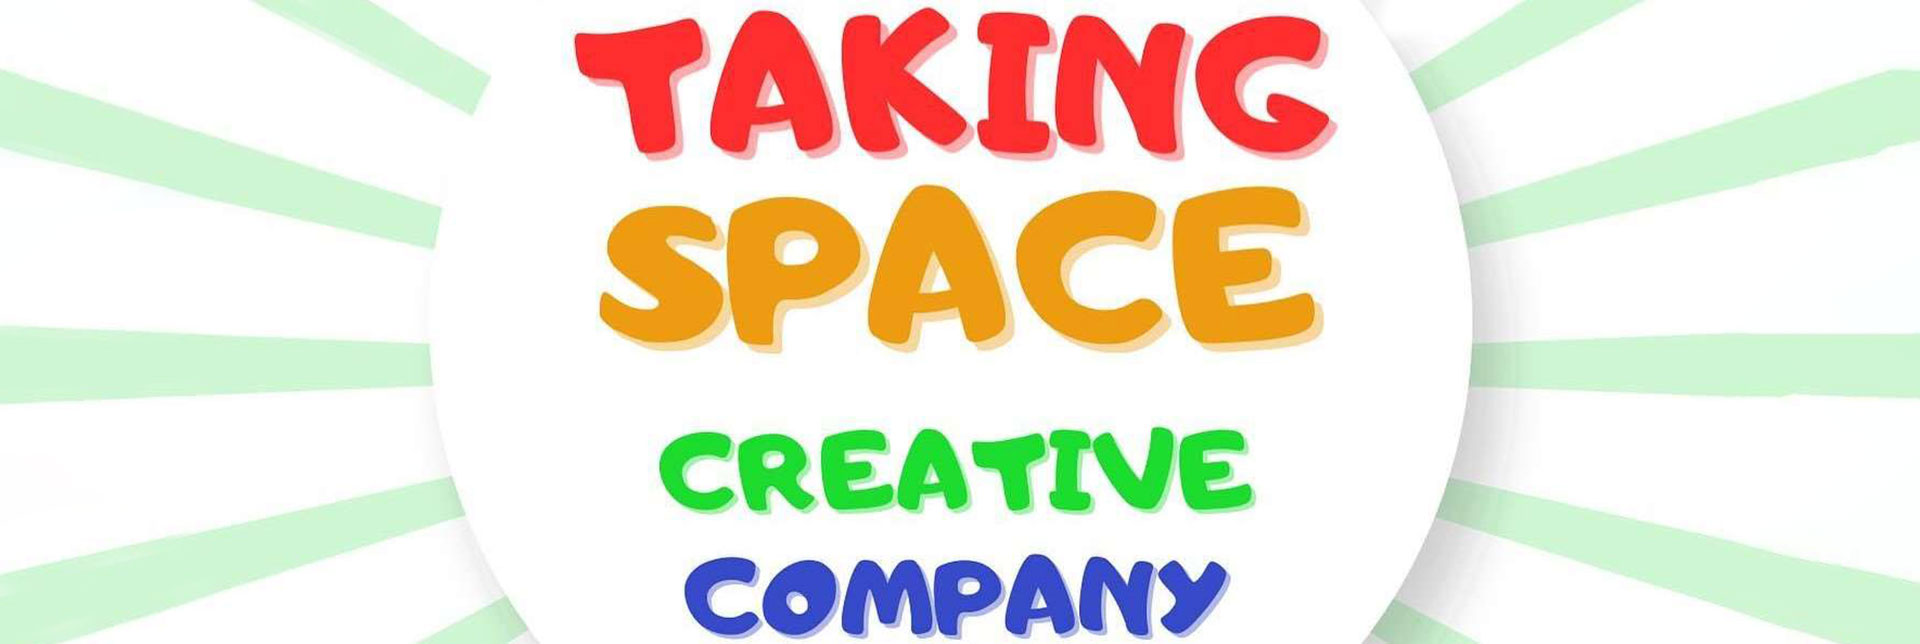 Taking Space Creative Company